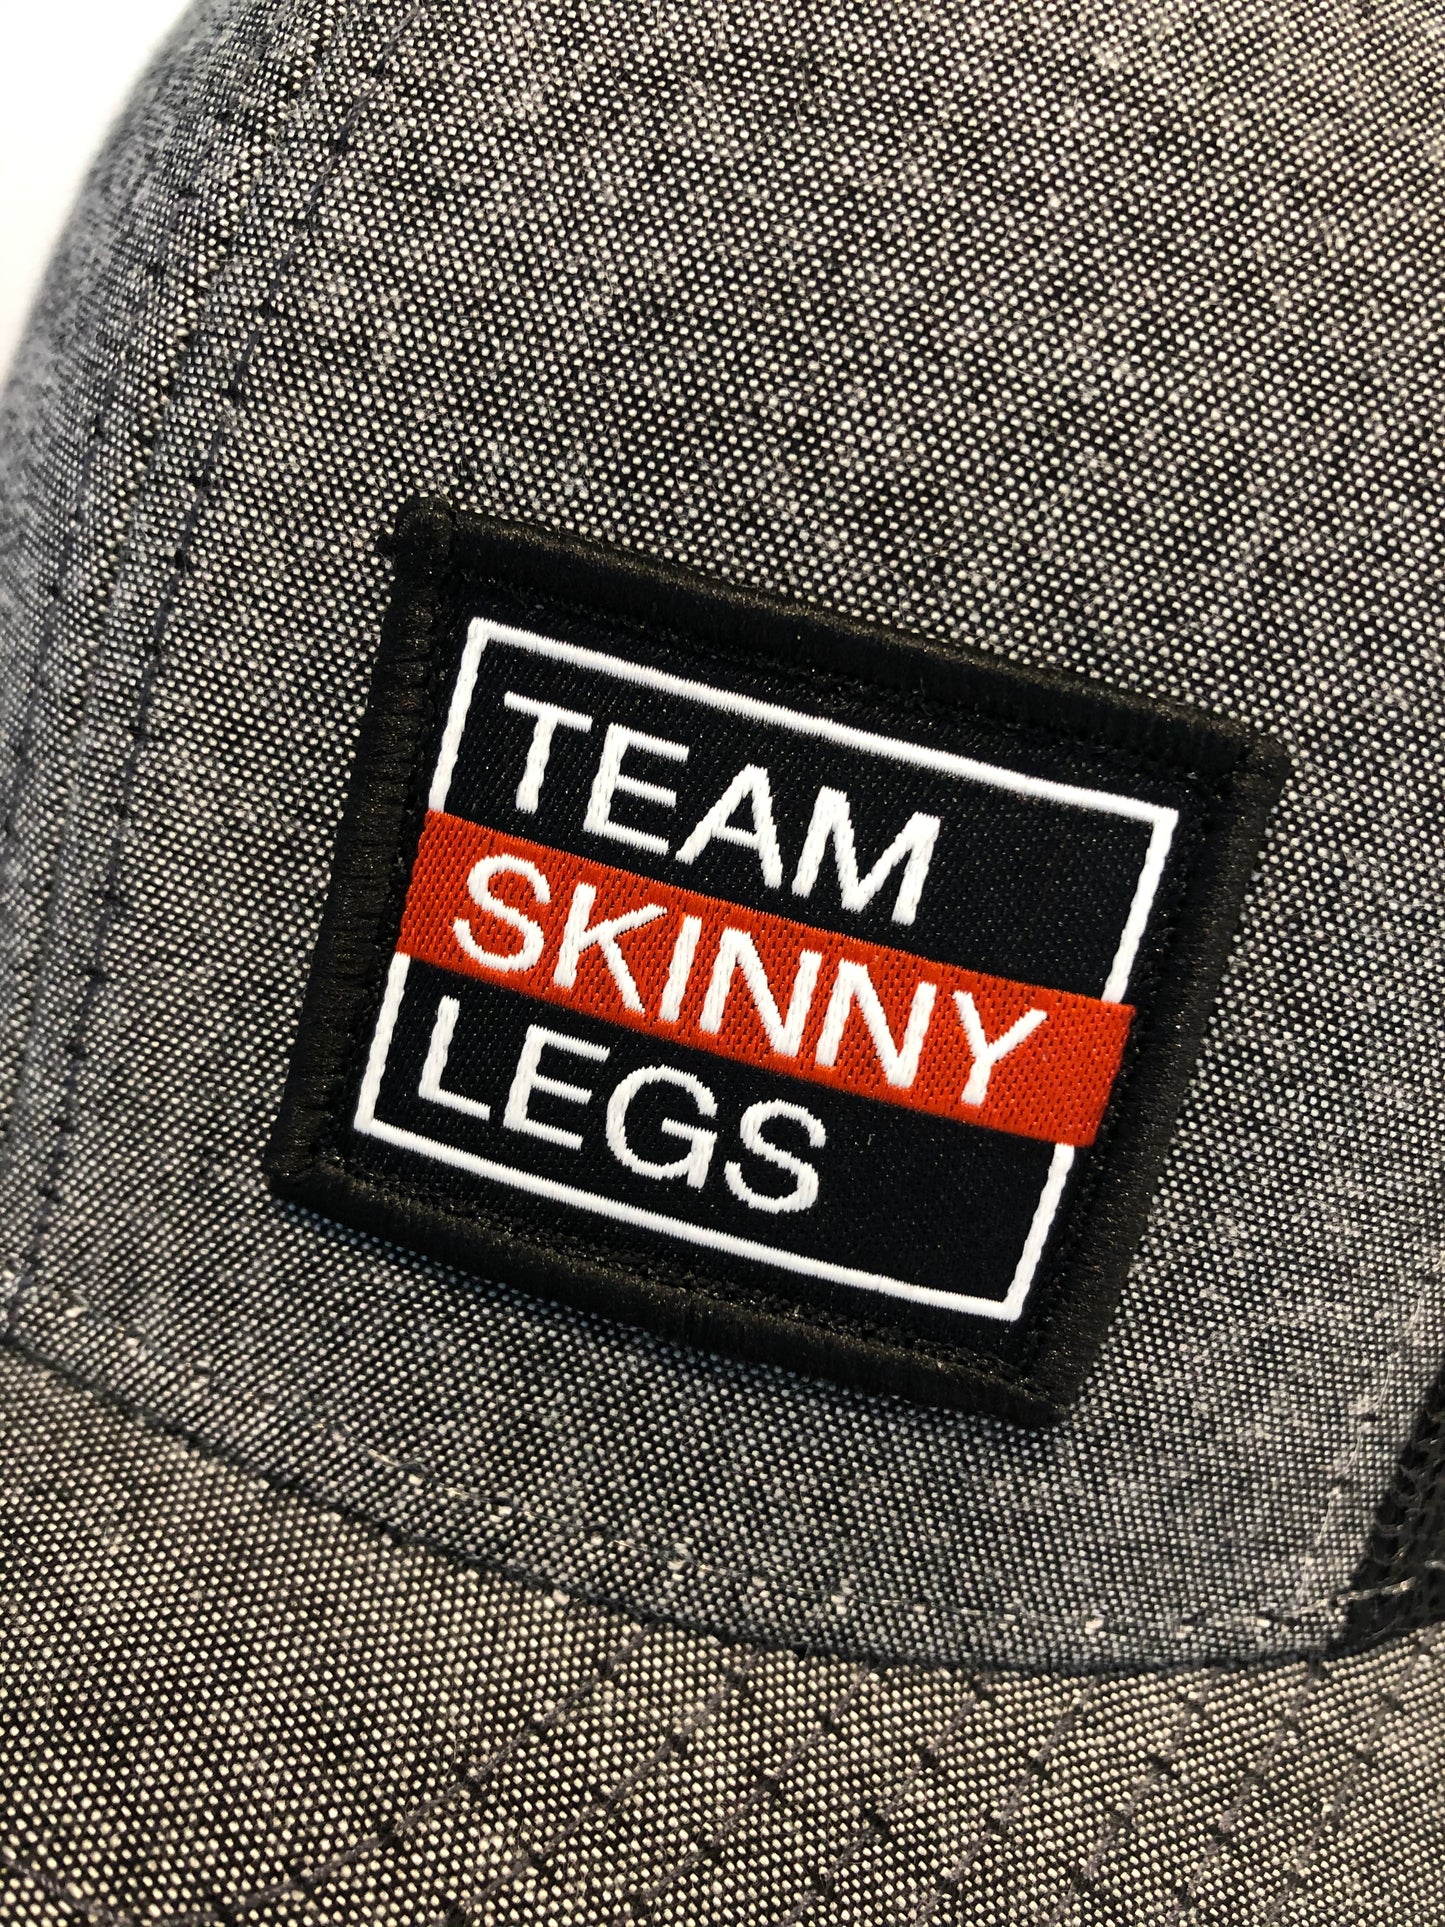 Team Skinny Legs - Logo Hat